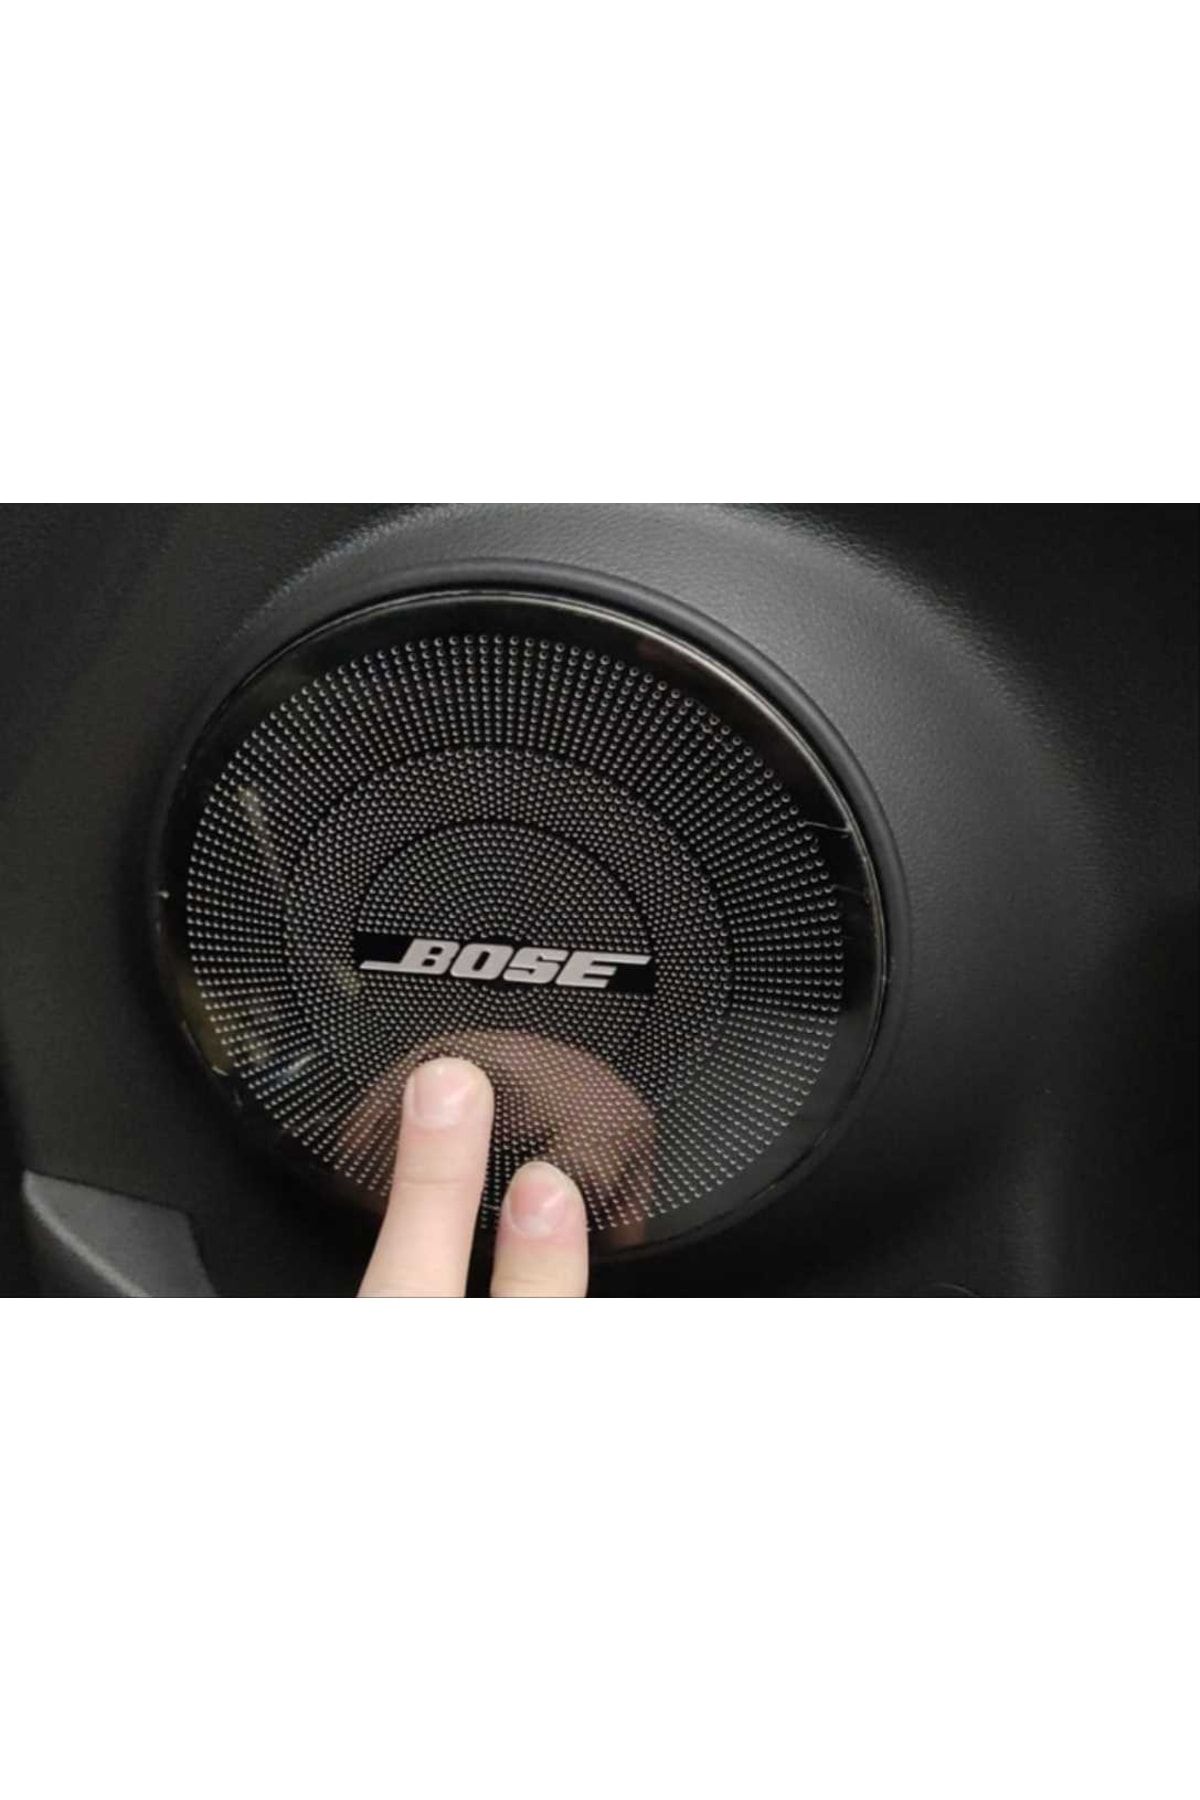 Hyundai Kona Içın Uyumlu Bose Hoparlör Kaplama - Tıtanyum Sıyah